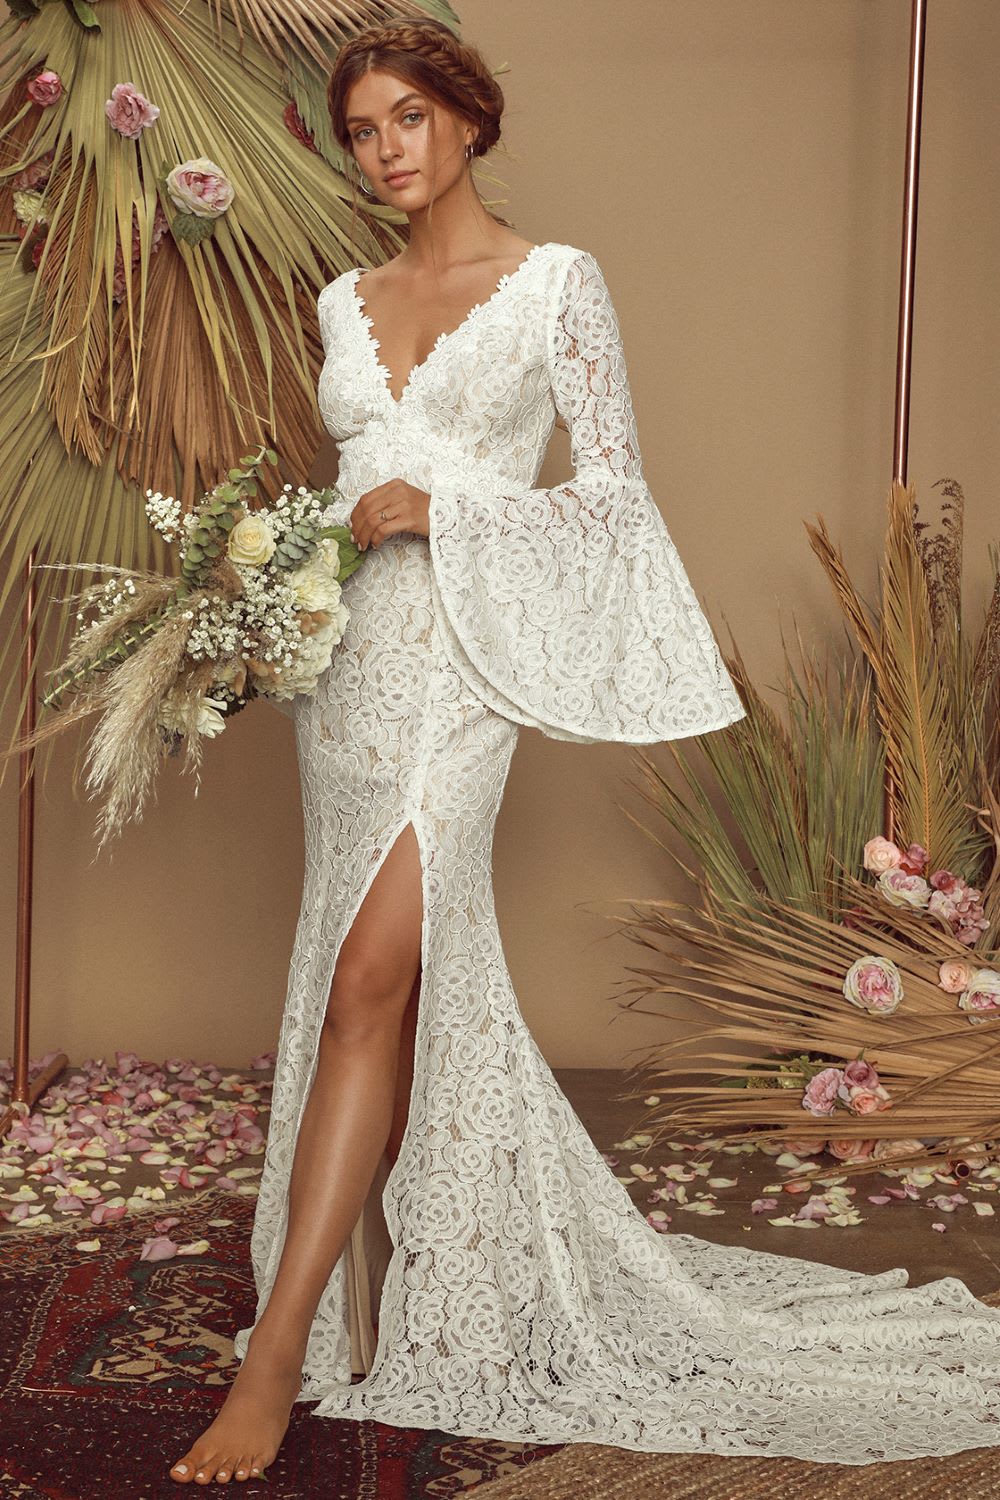 11 Romantic Boho Wedding Dress Options - Lulus.com Fashion ...